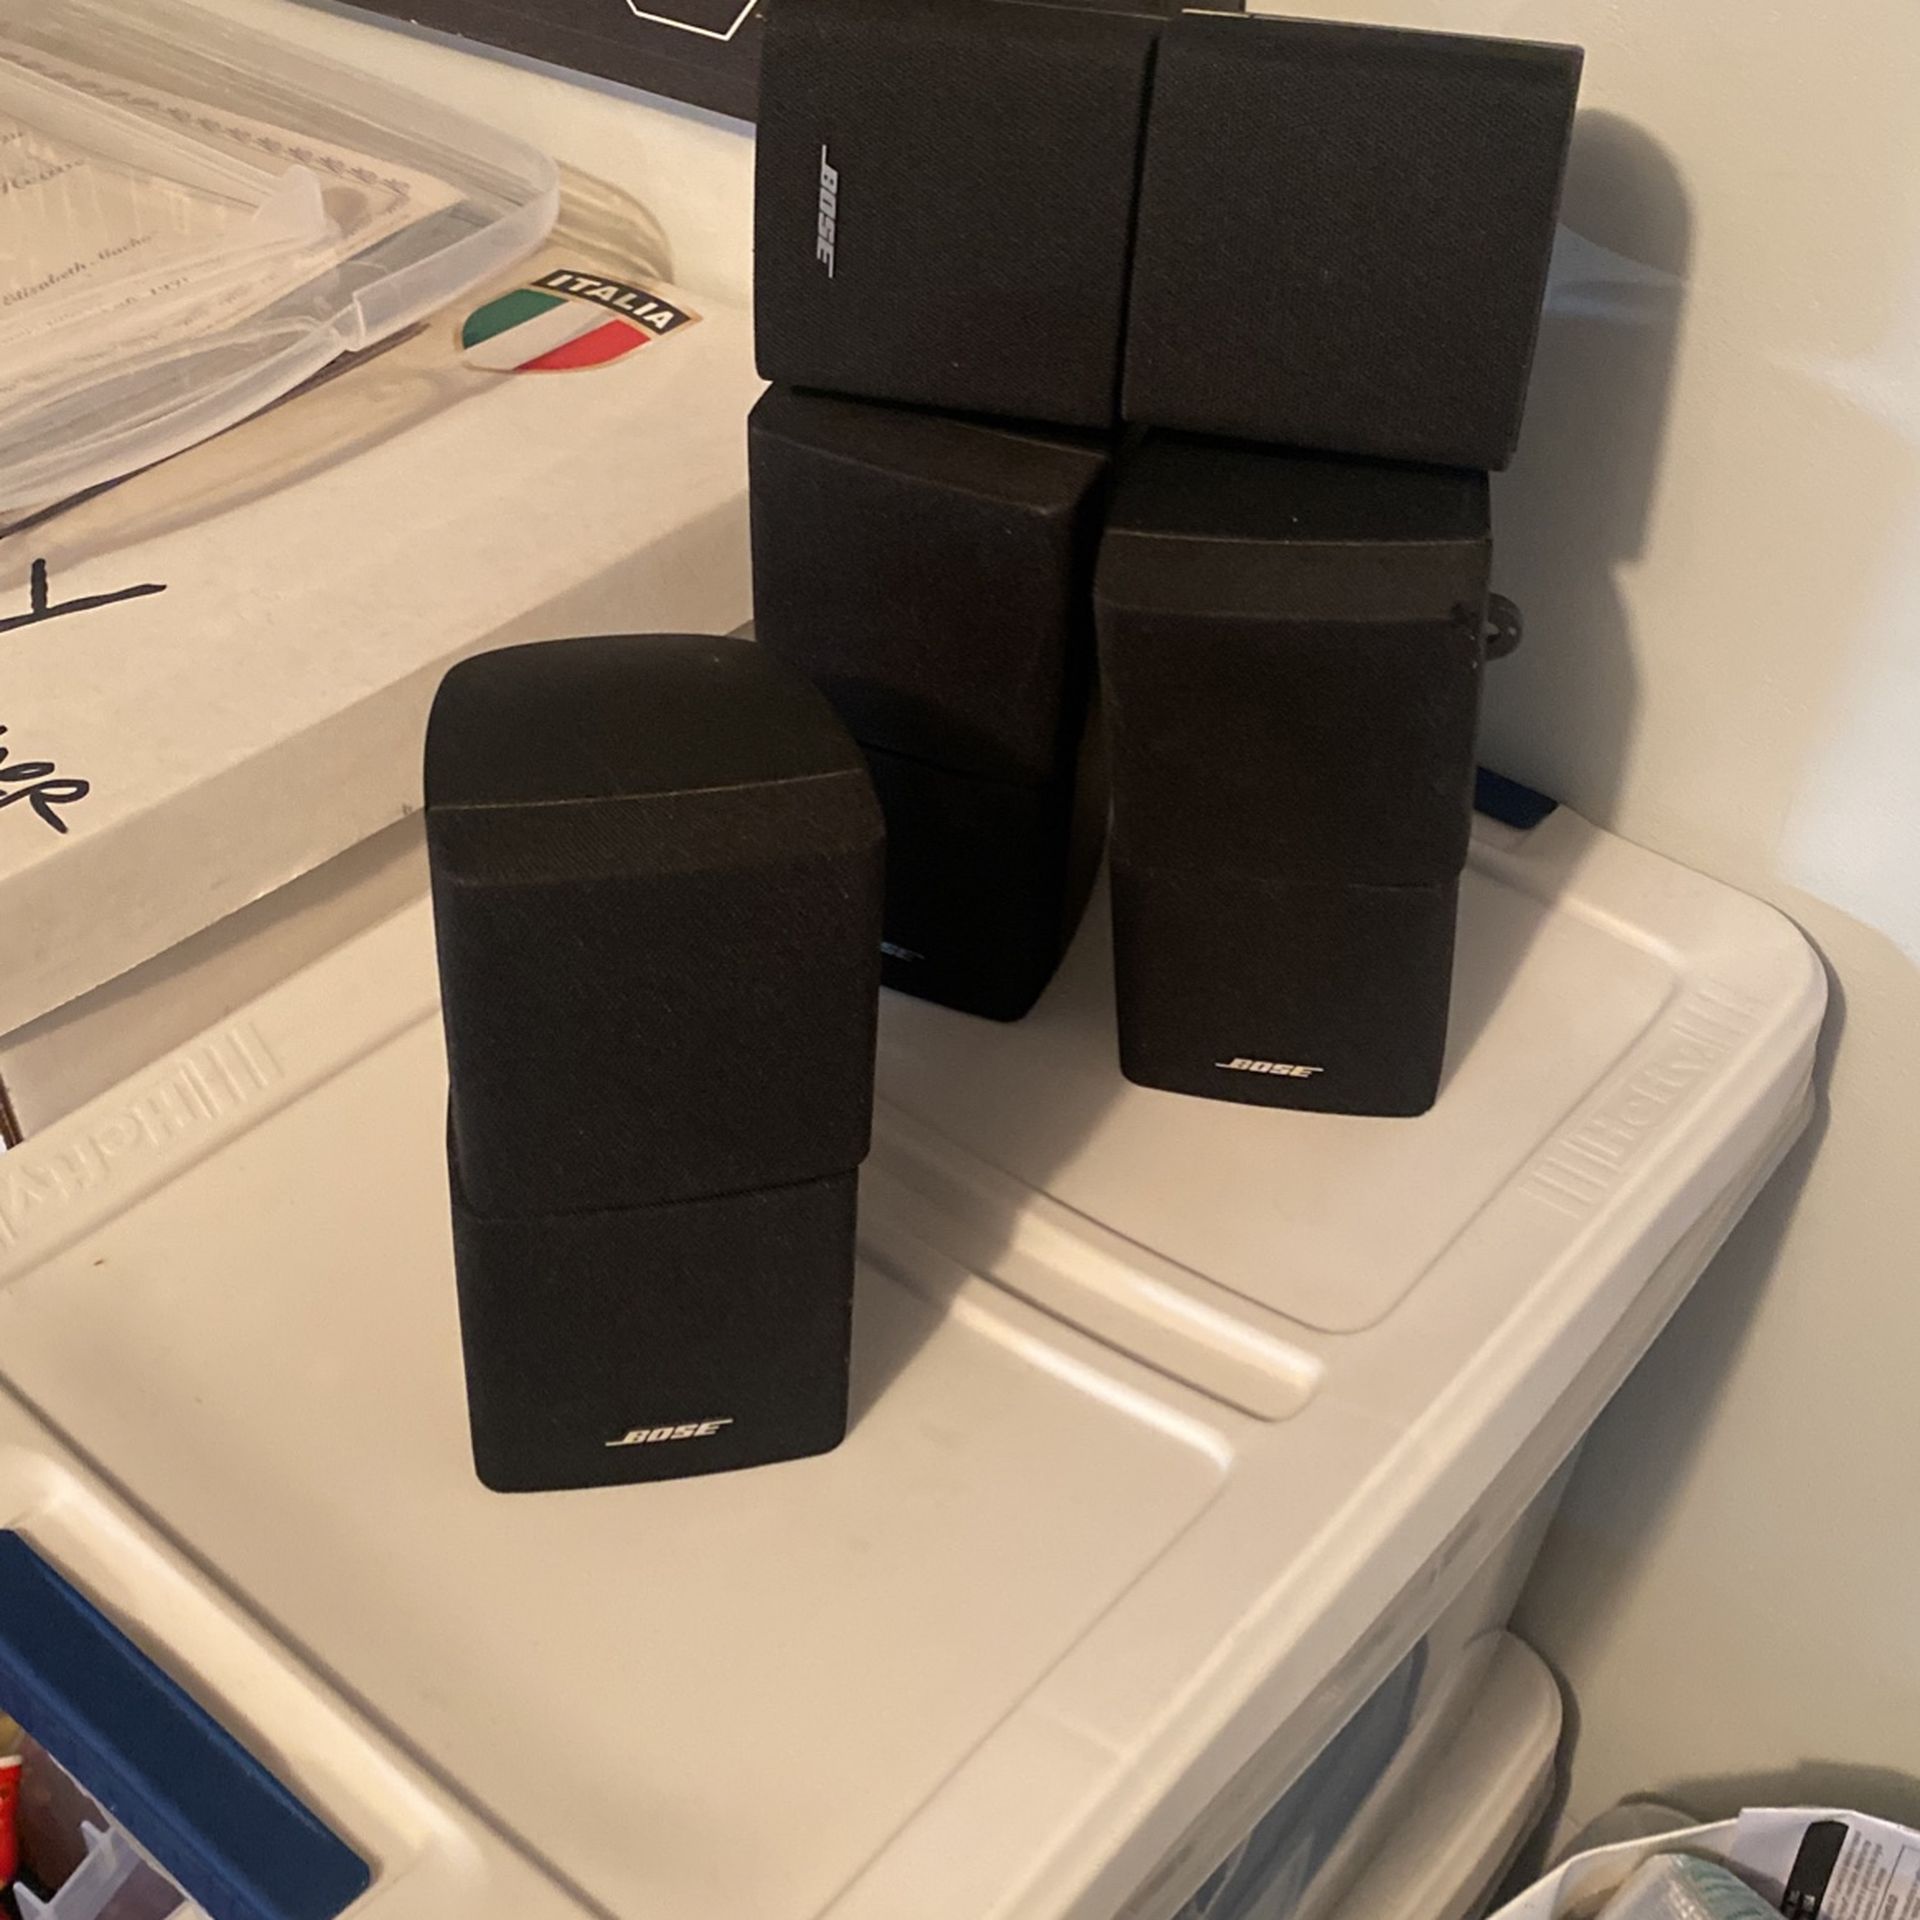 4 Bose speaker cubes Stereo speakers